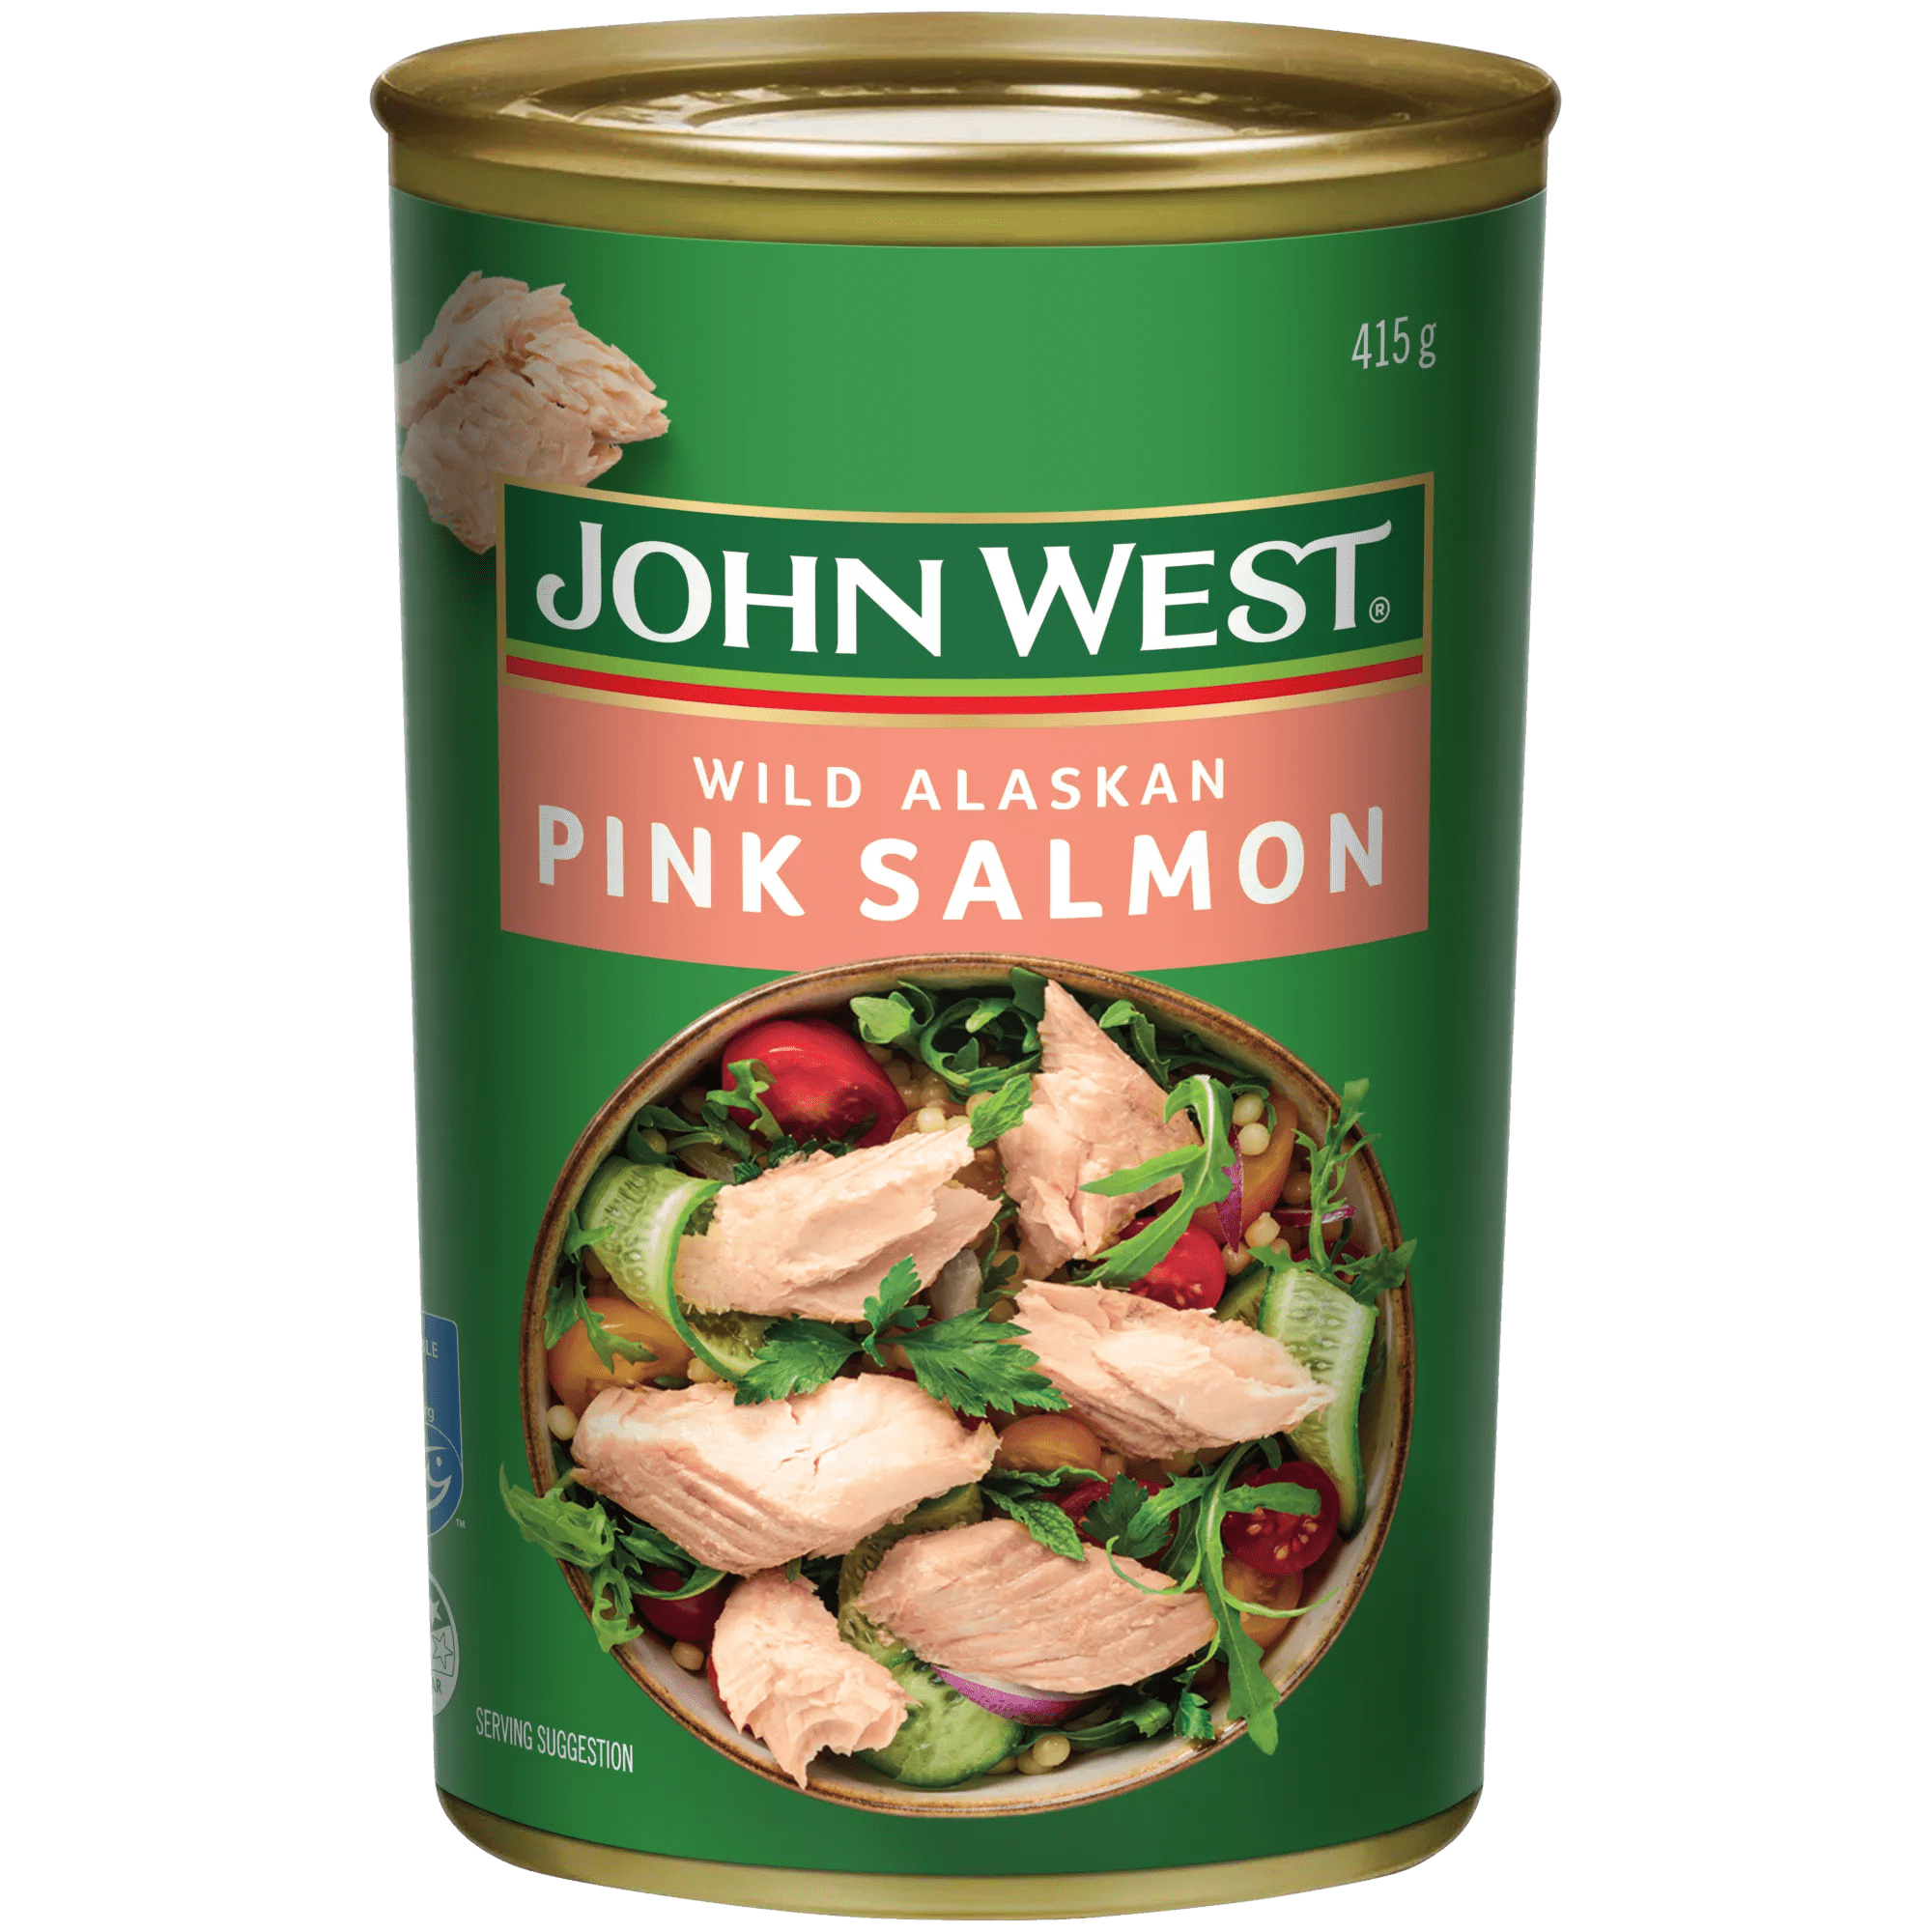 John West Wild Alaskan Pink Salmon 415g